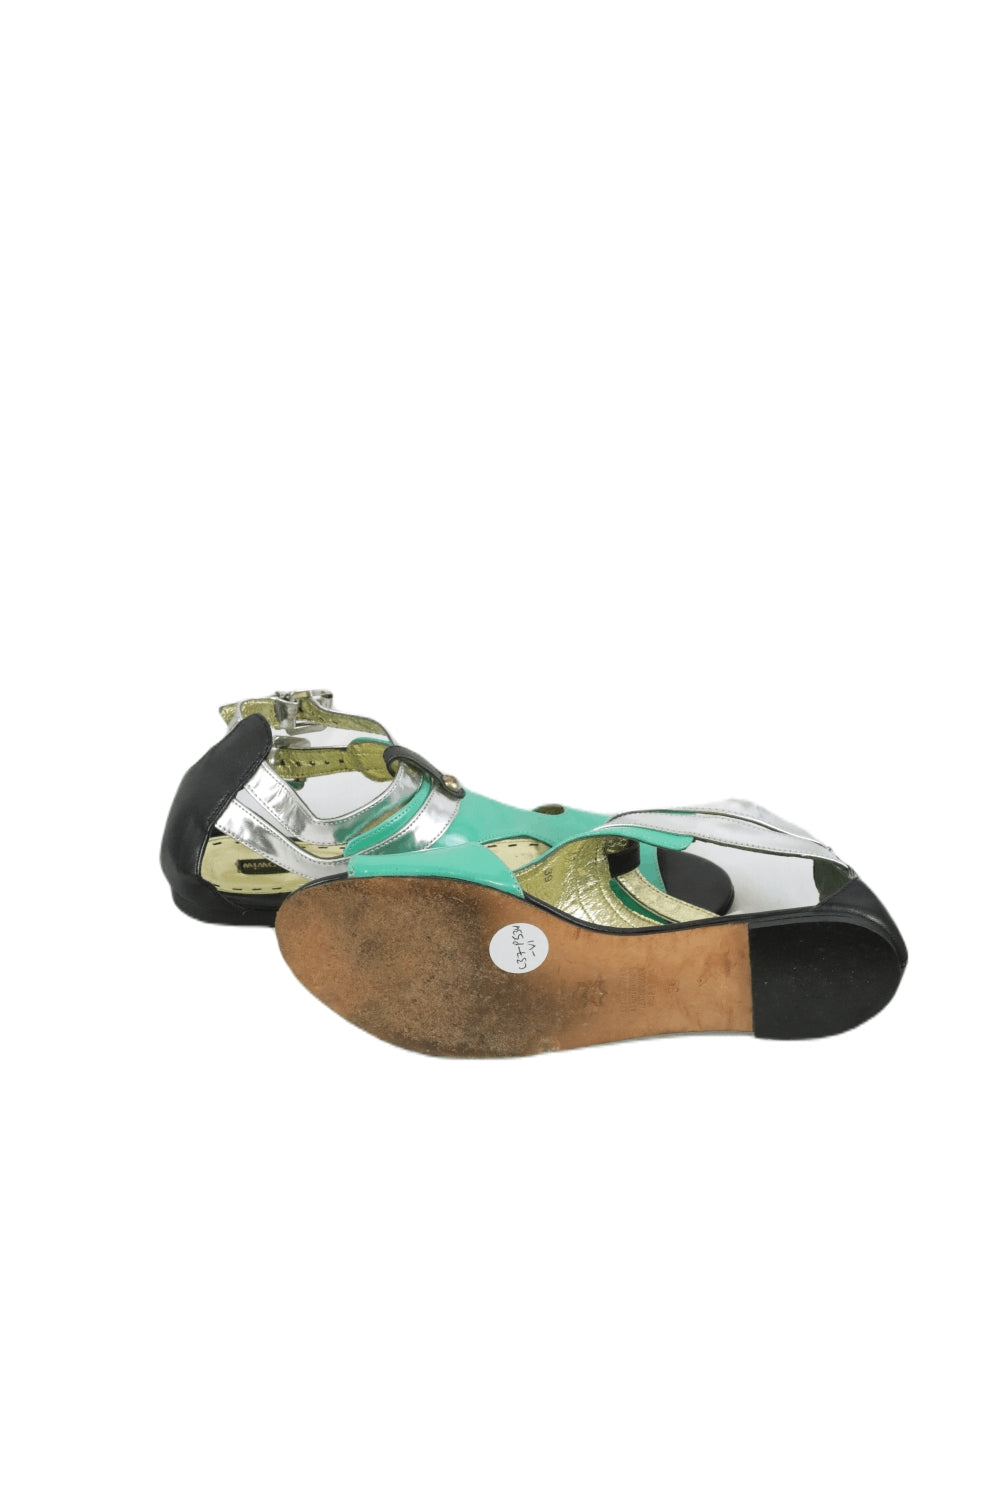 Mimco Green Sandals 39